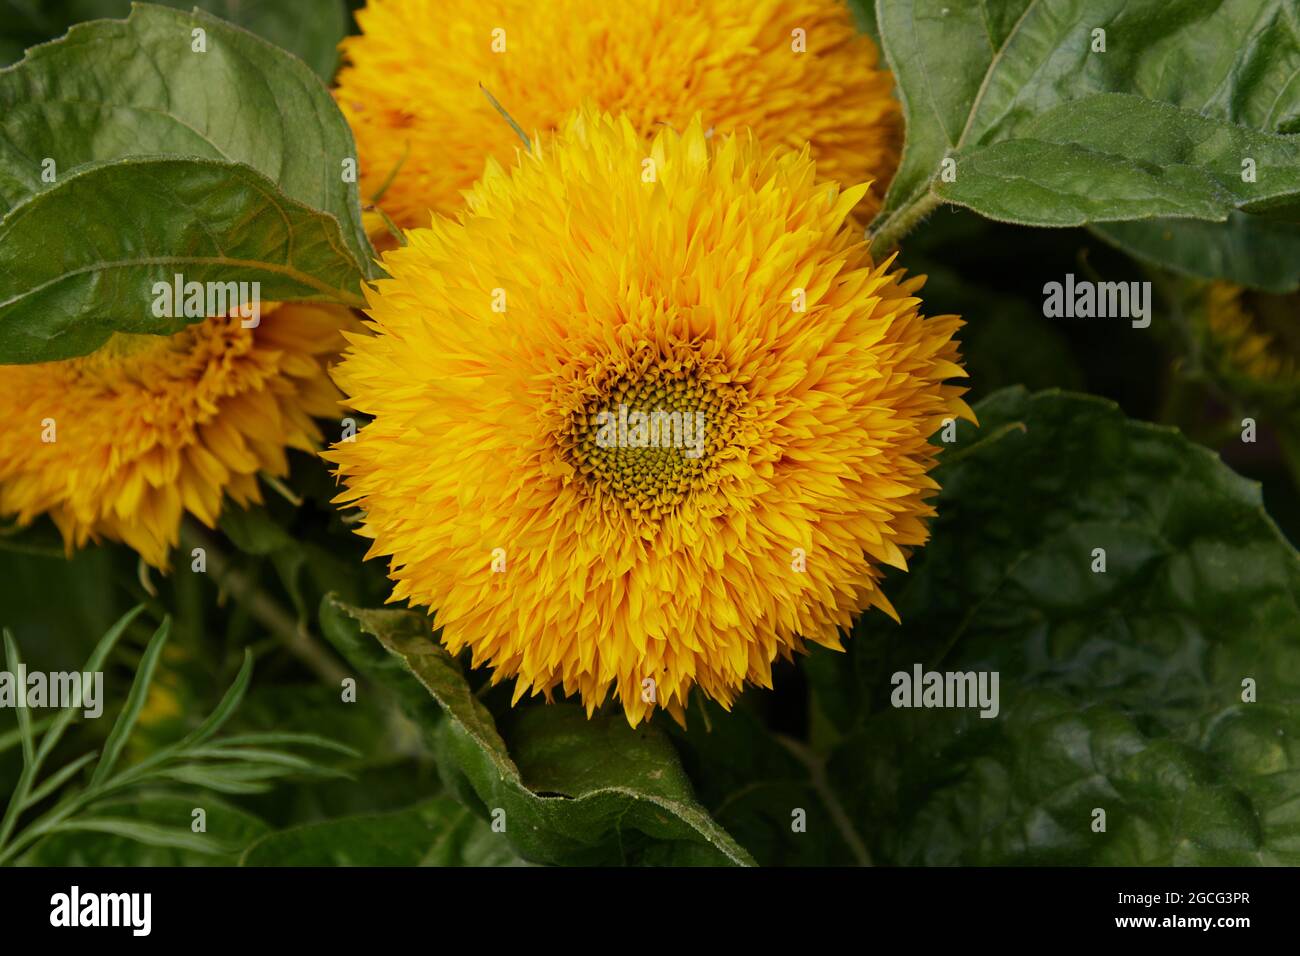 Blooms of sunflower Teddy bear. Stock Photo